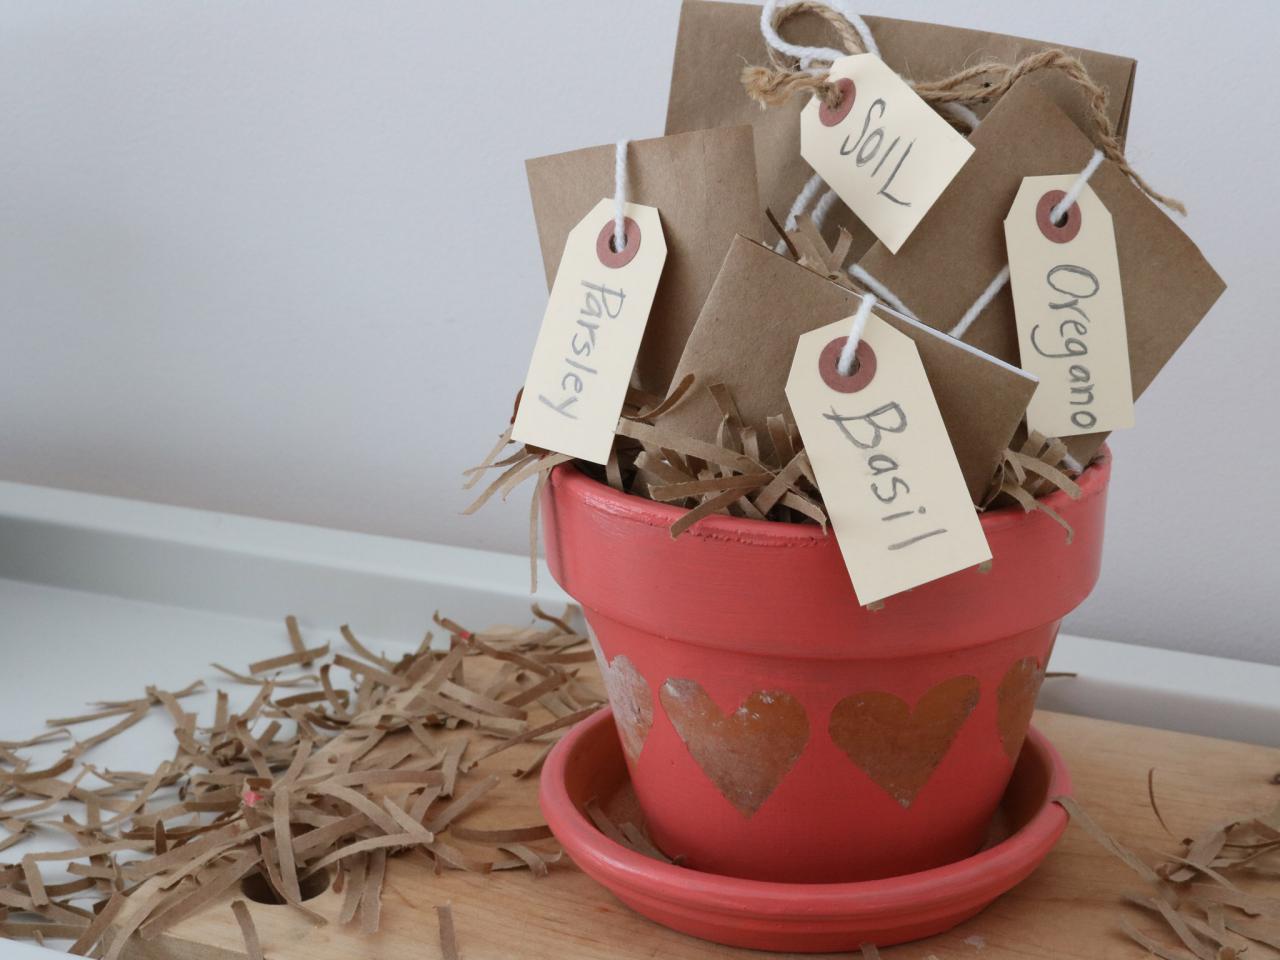 Diy Herb Garden Kit For Valentine S Day Diy Network Blog Made